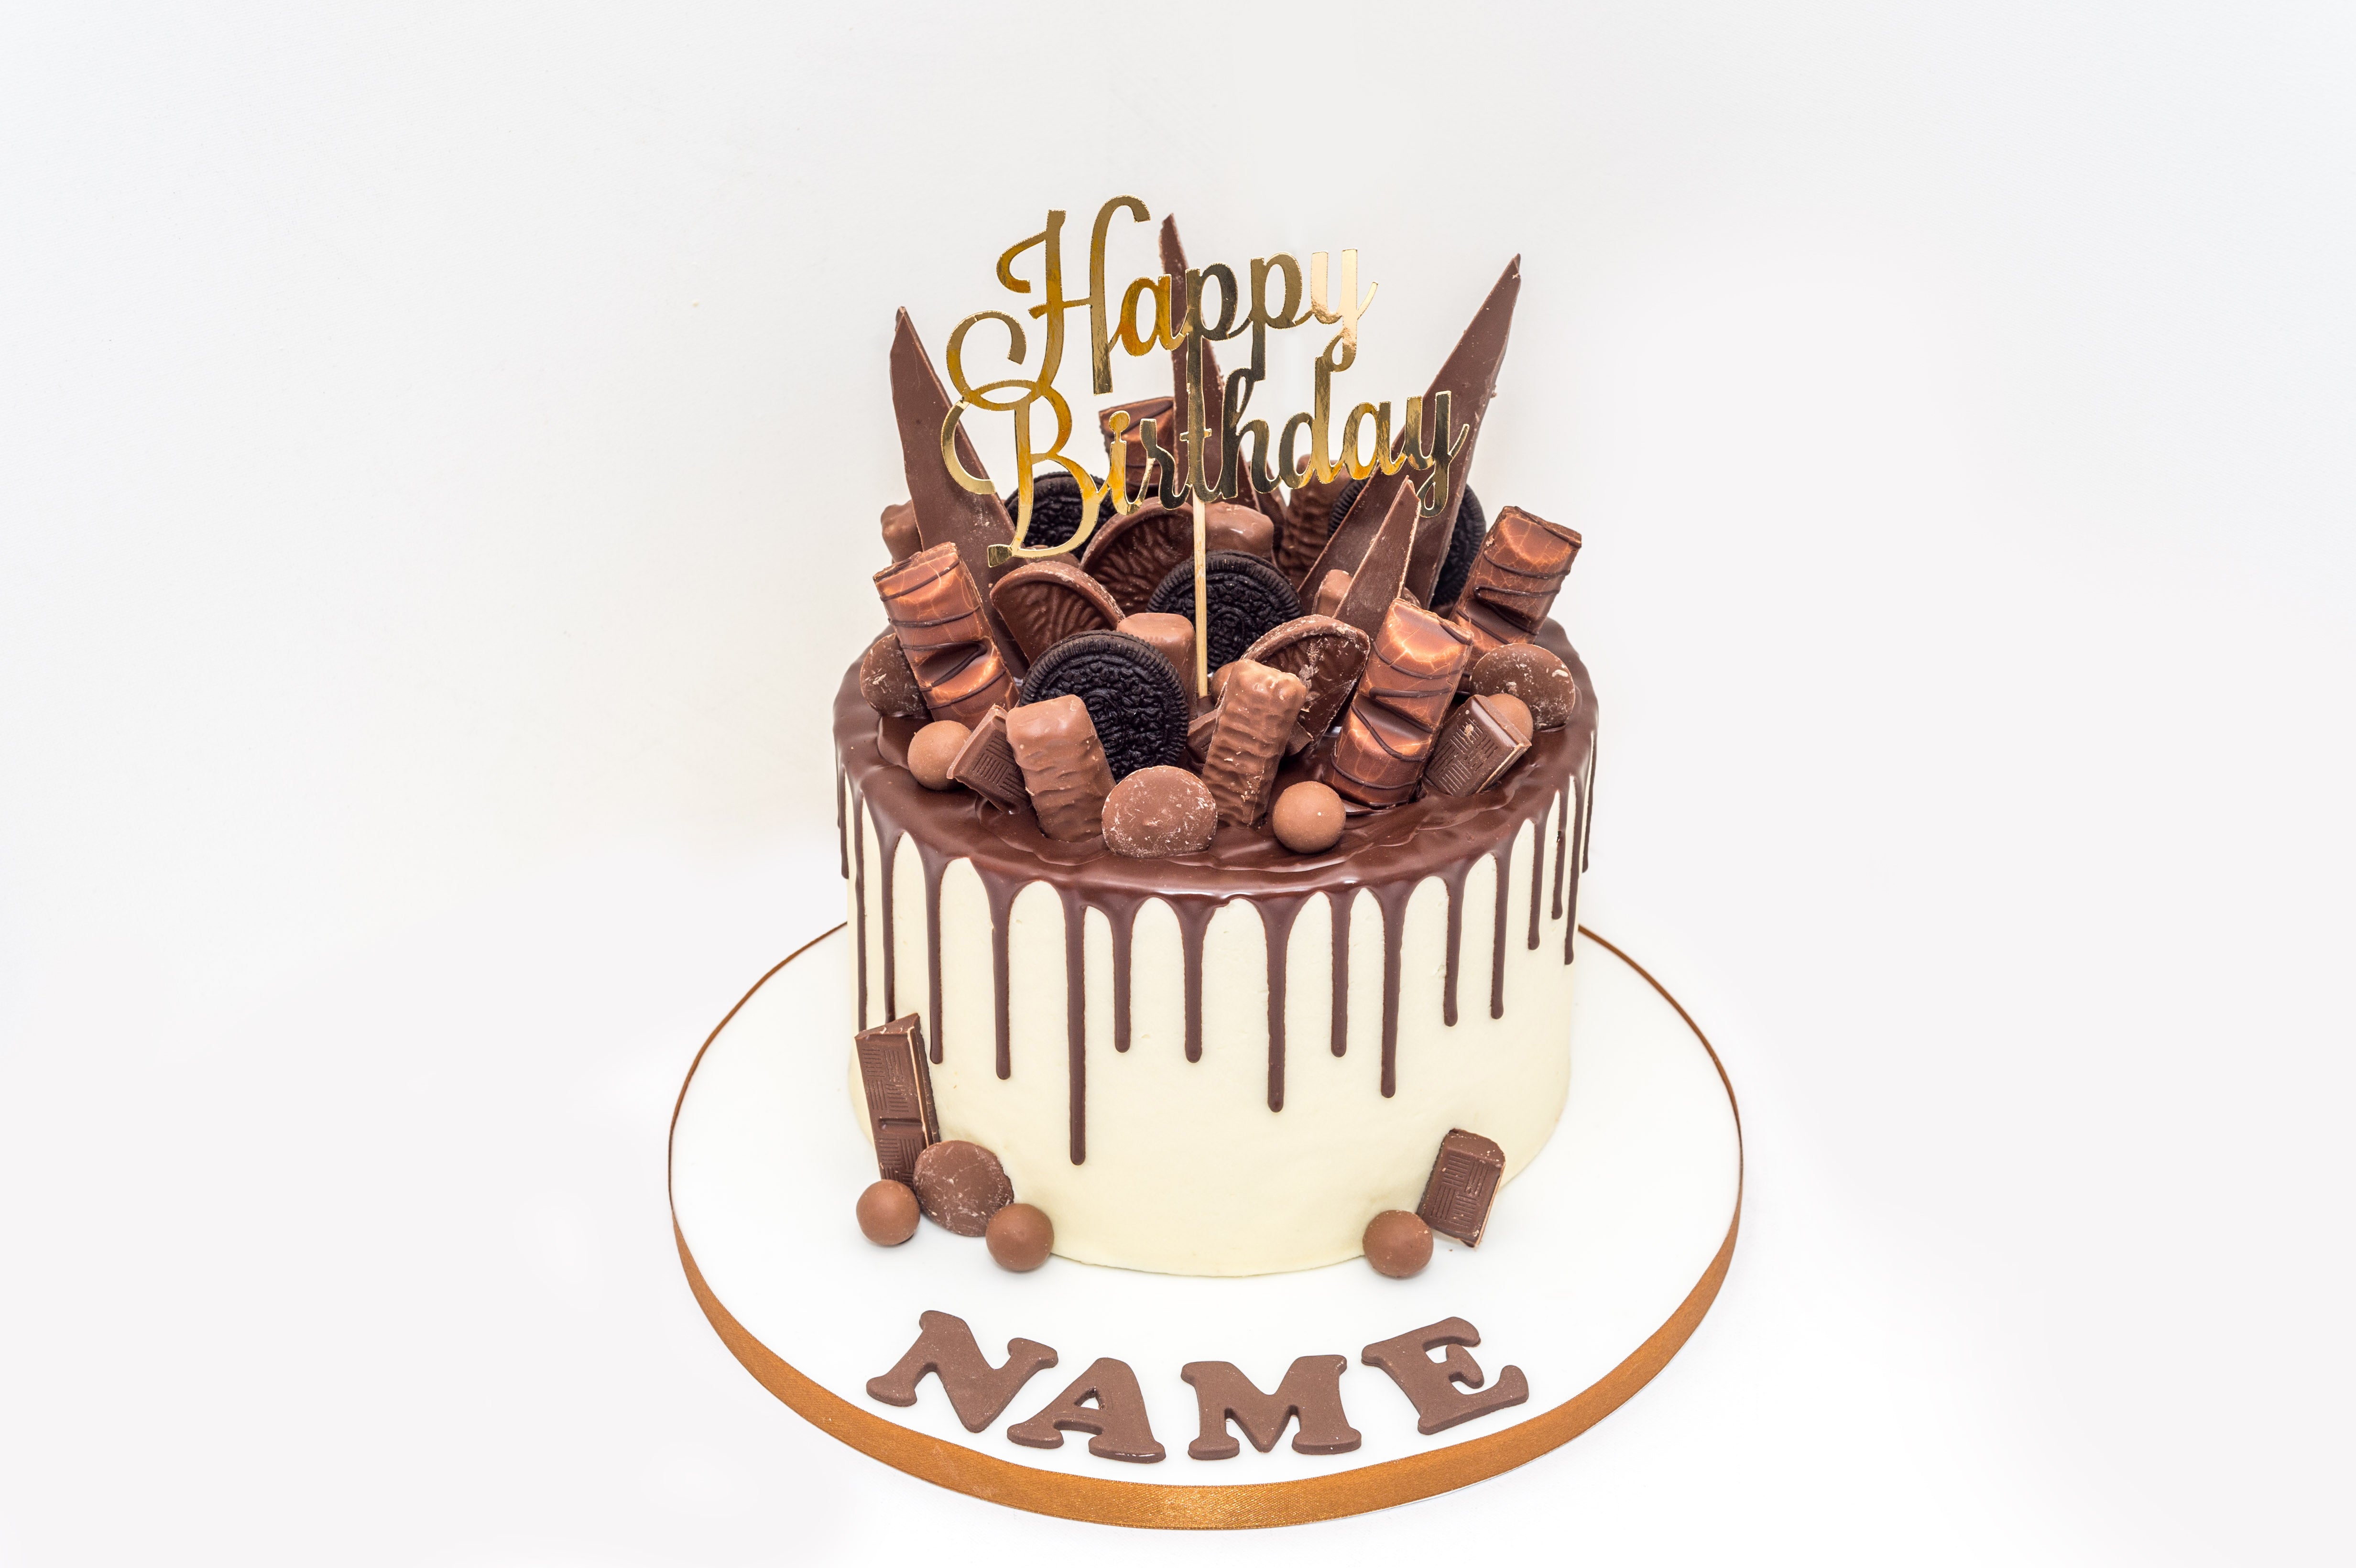 Chocolate explosion - Decorated Cake by Jo9071 - CakesDecor